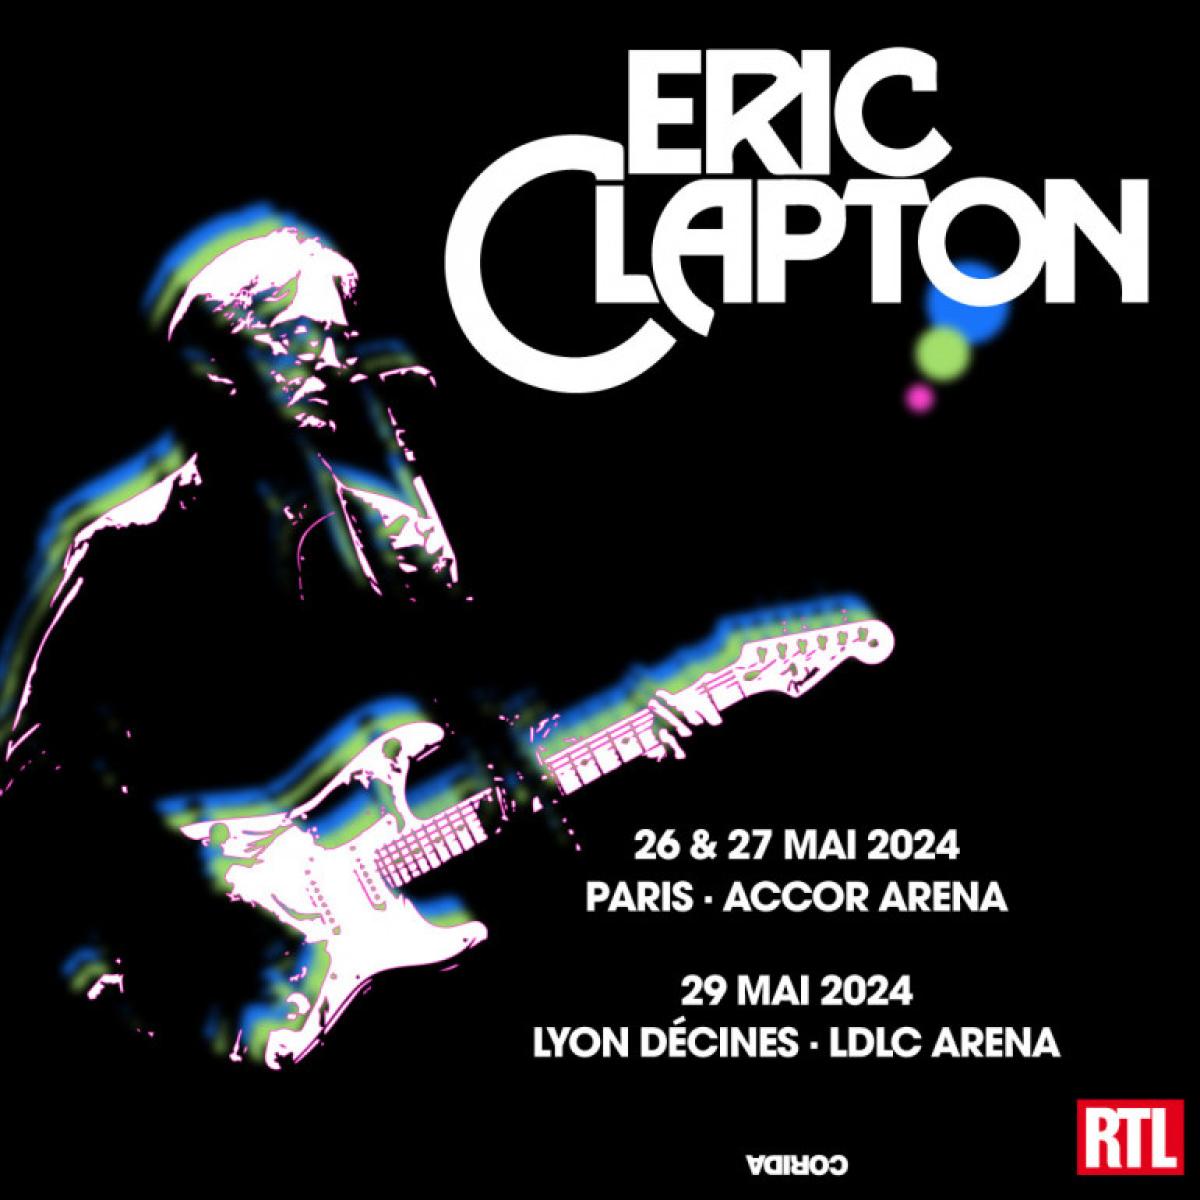 Eric Clapton at LDLC Arena Tickets